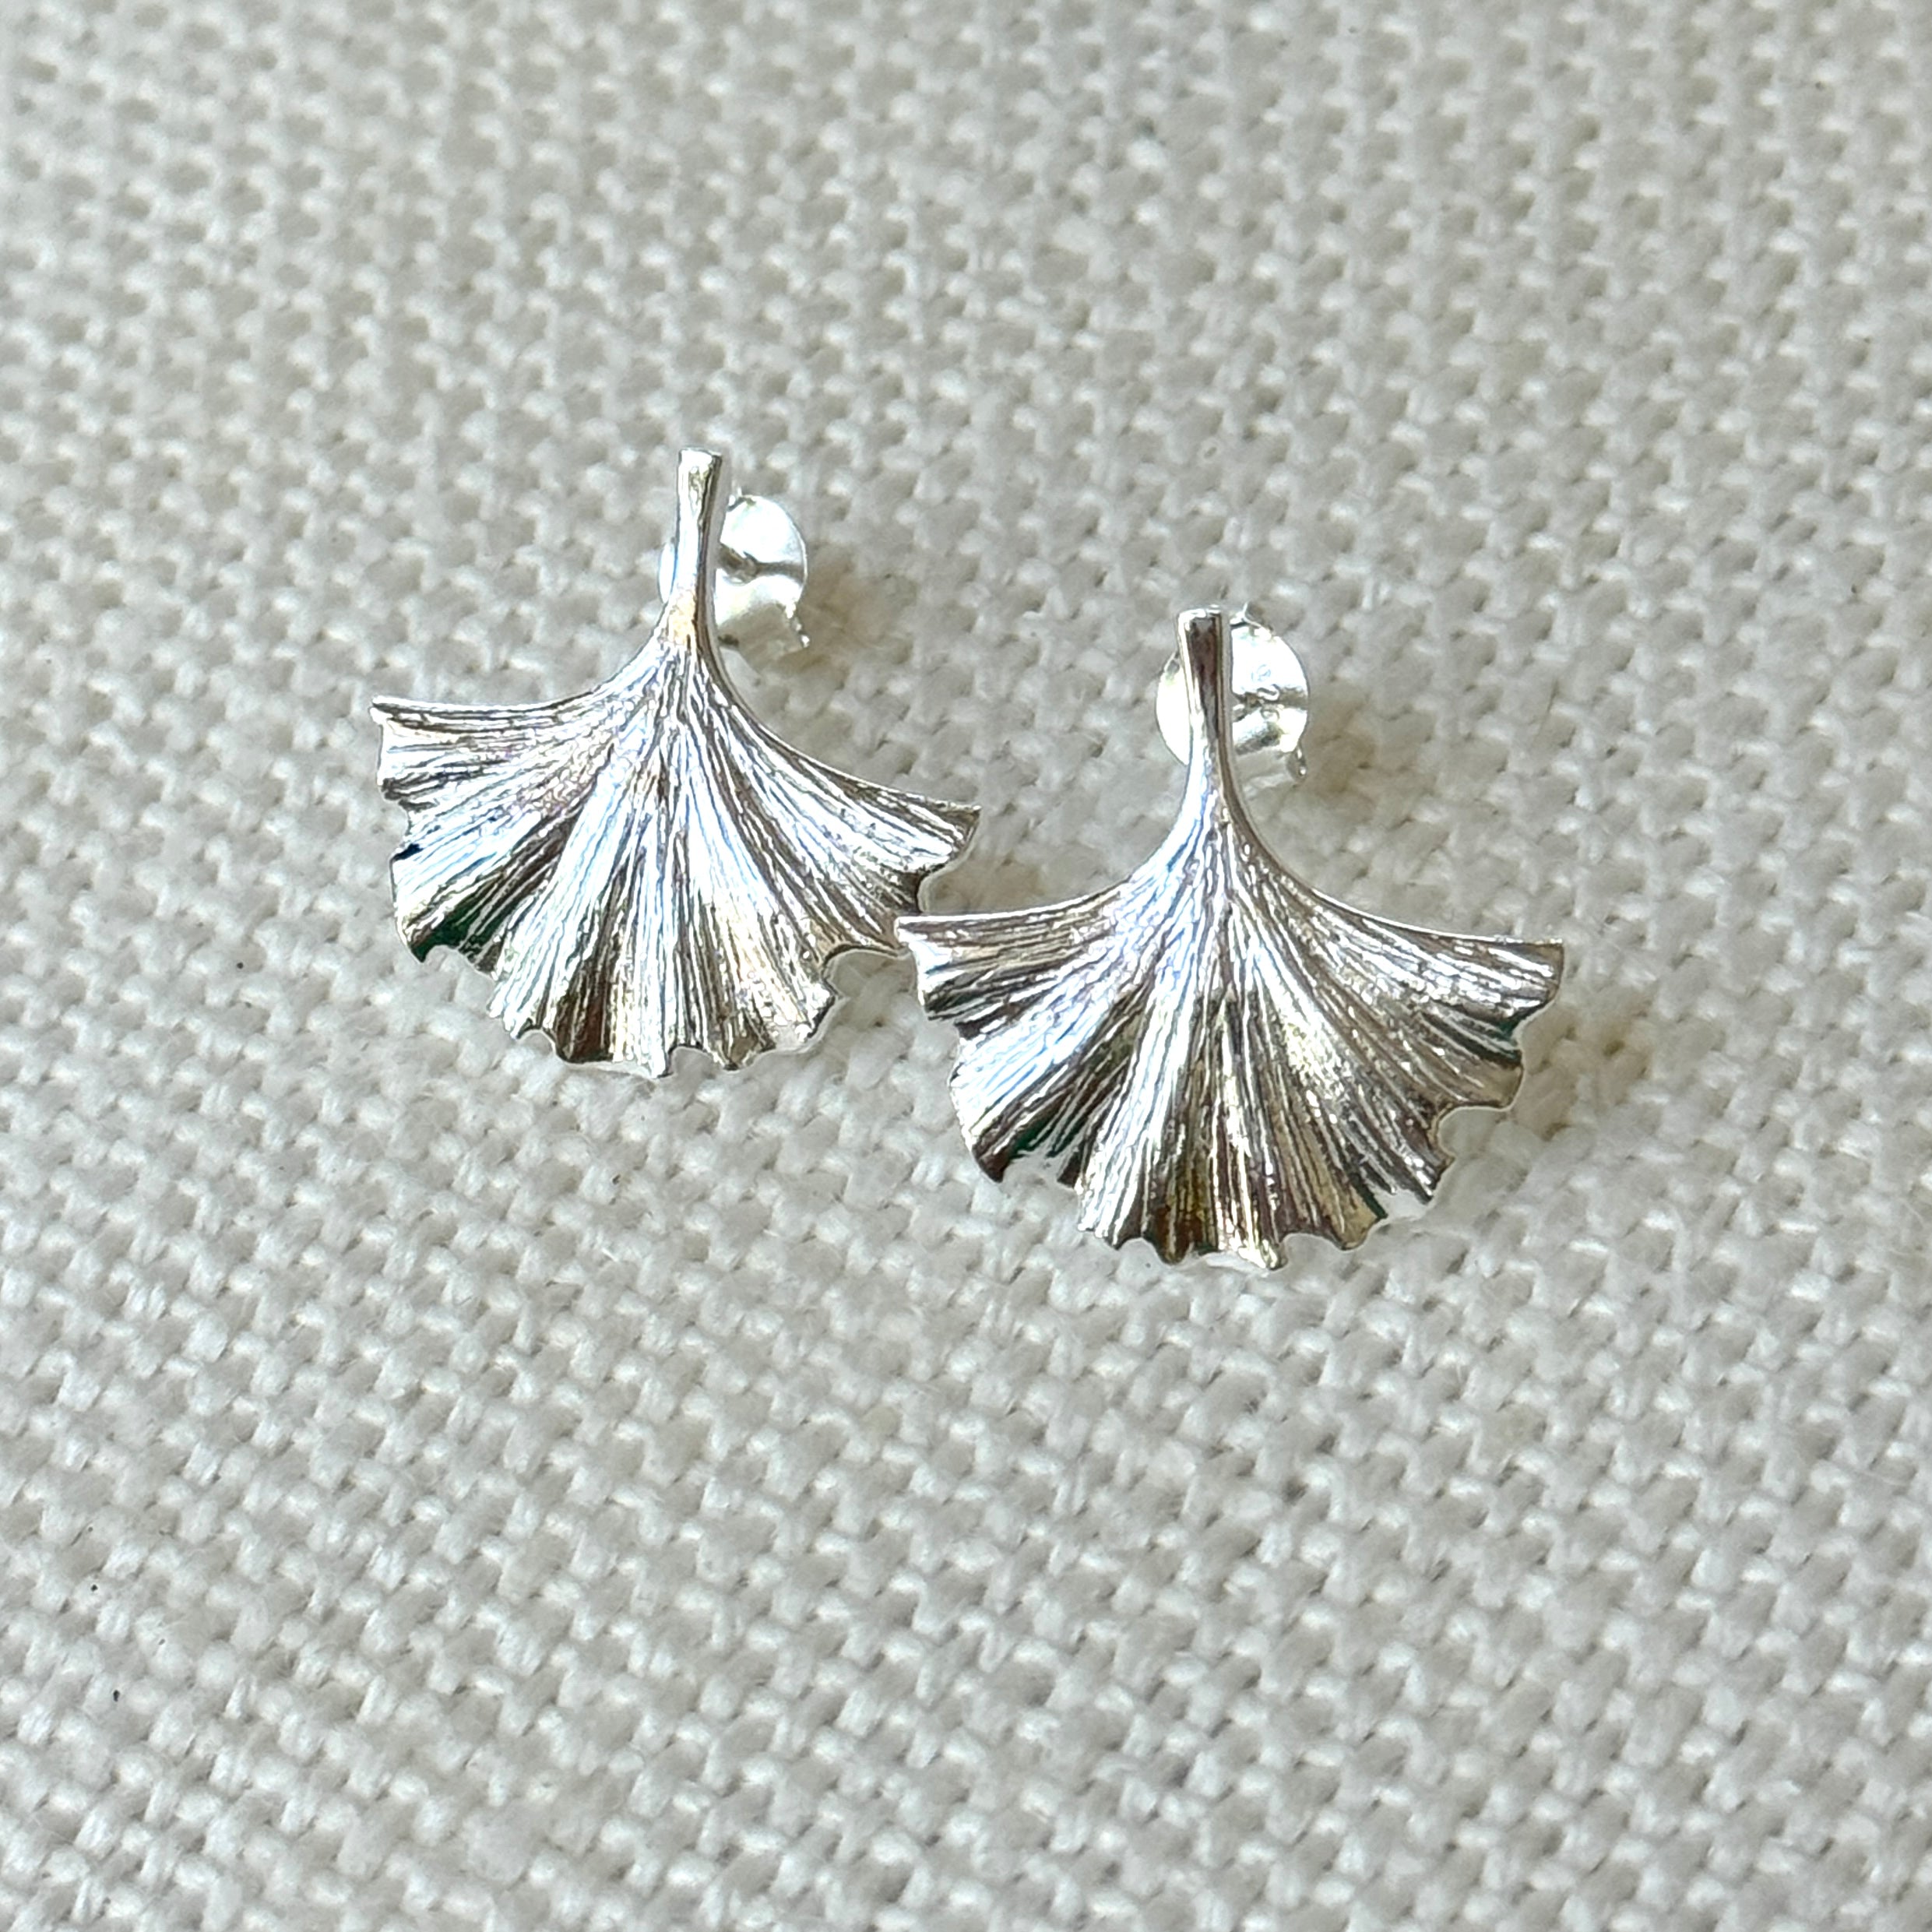 Gingko Leaf Earring (Gold or Silver)